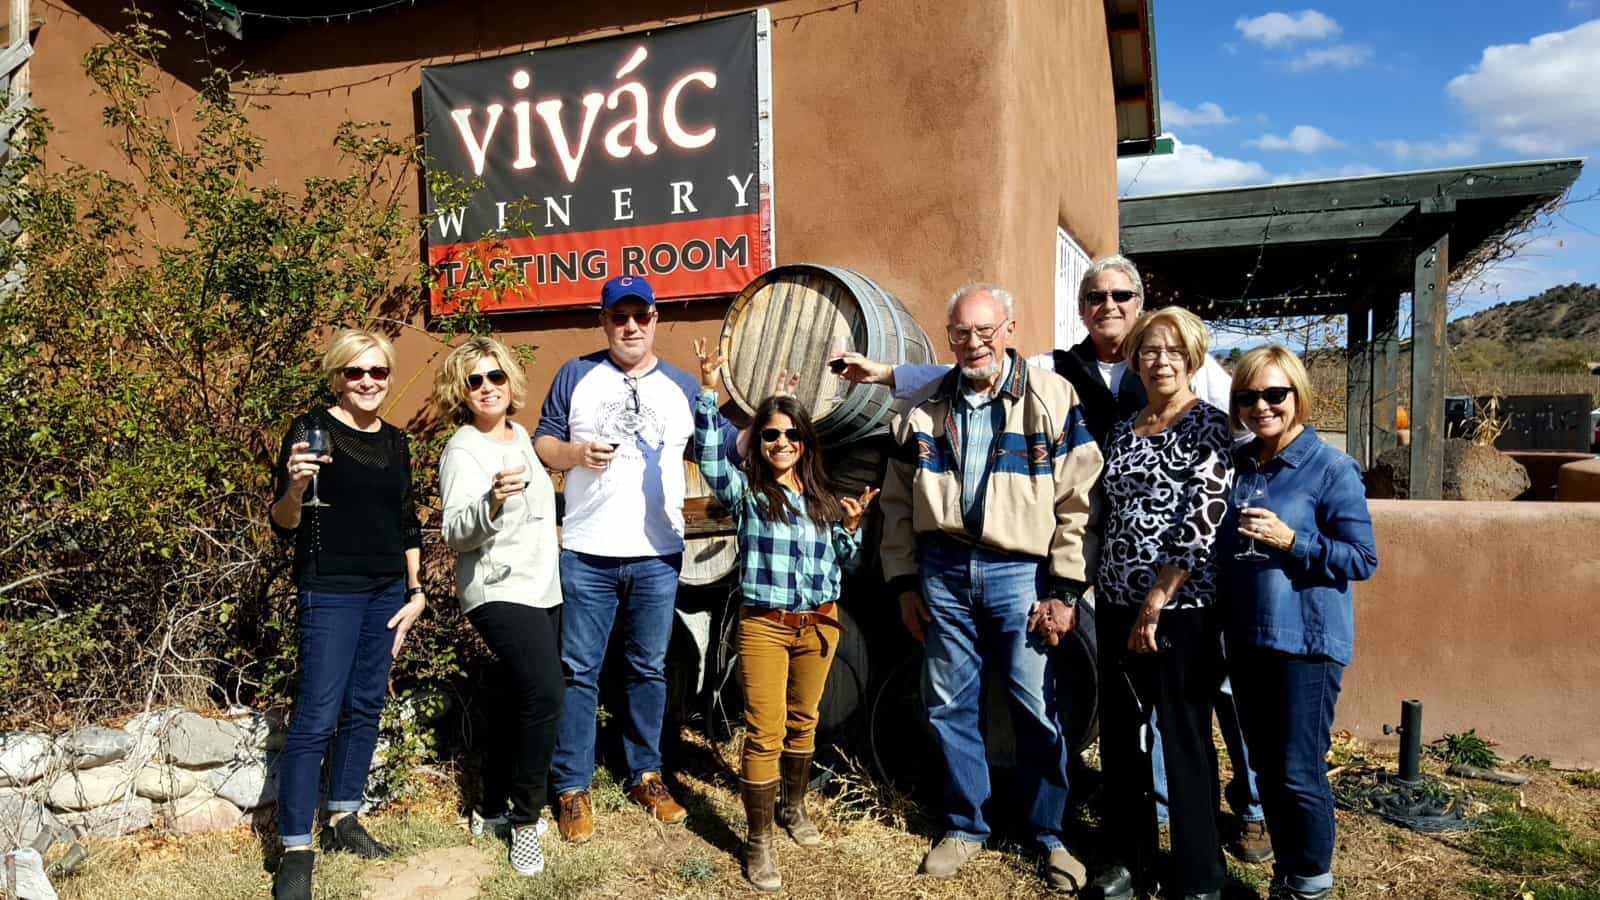 Vivac Winery Tasting